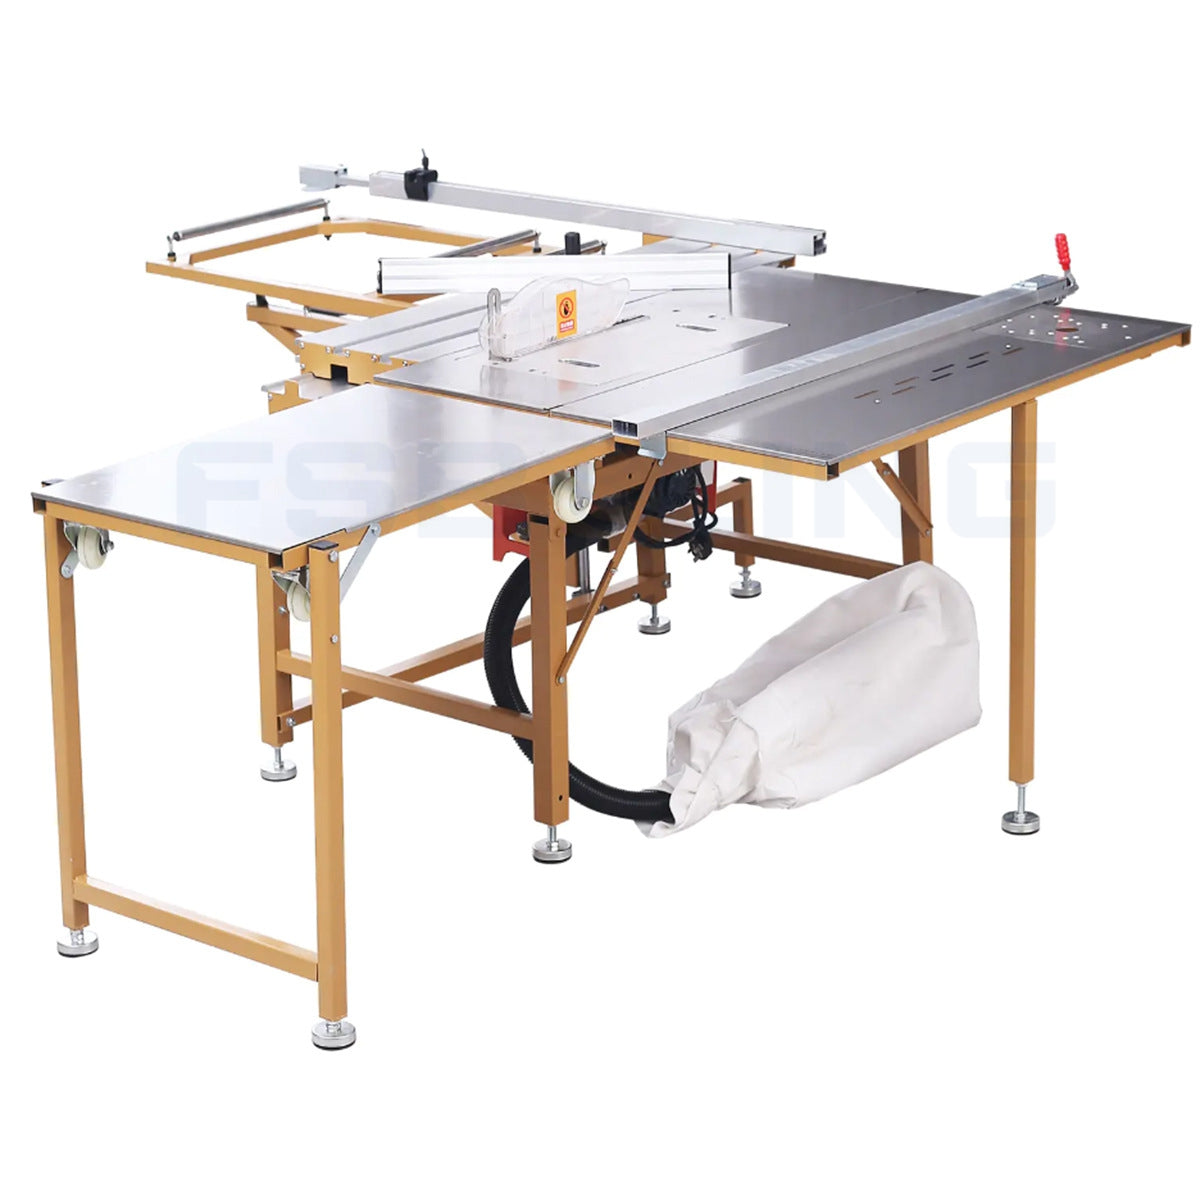 Woodworking Precision Cutting Table Saw BL-M15 – FSBOLING